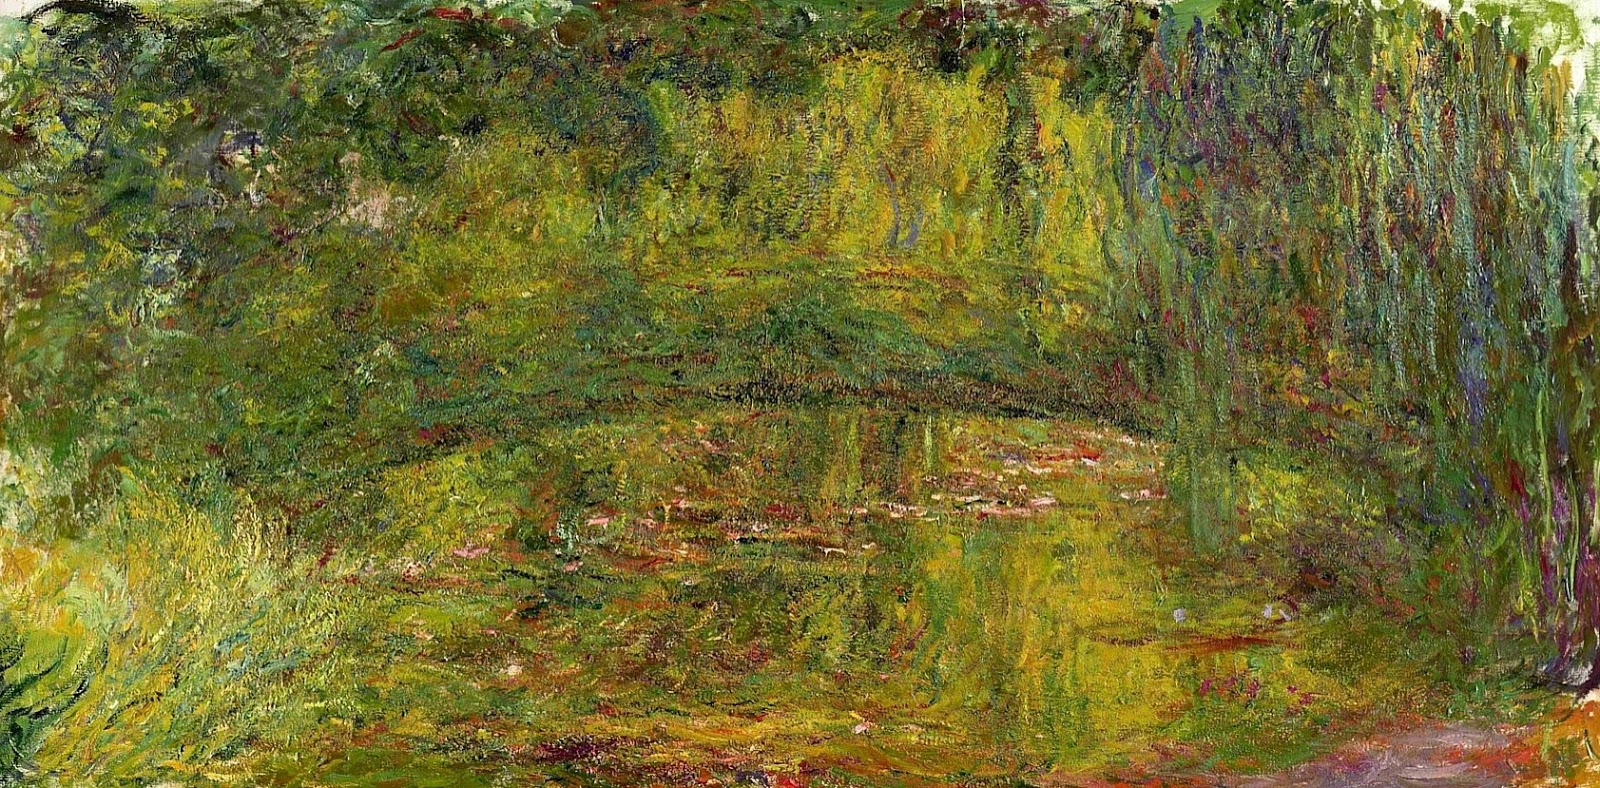 Claude+Monet-1840-1926 (455).jpg